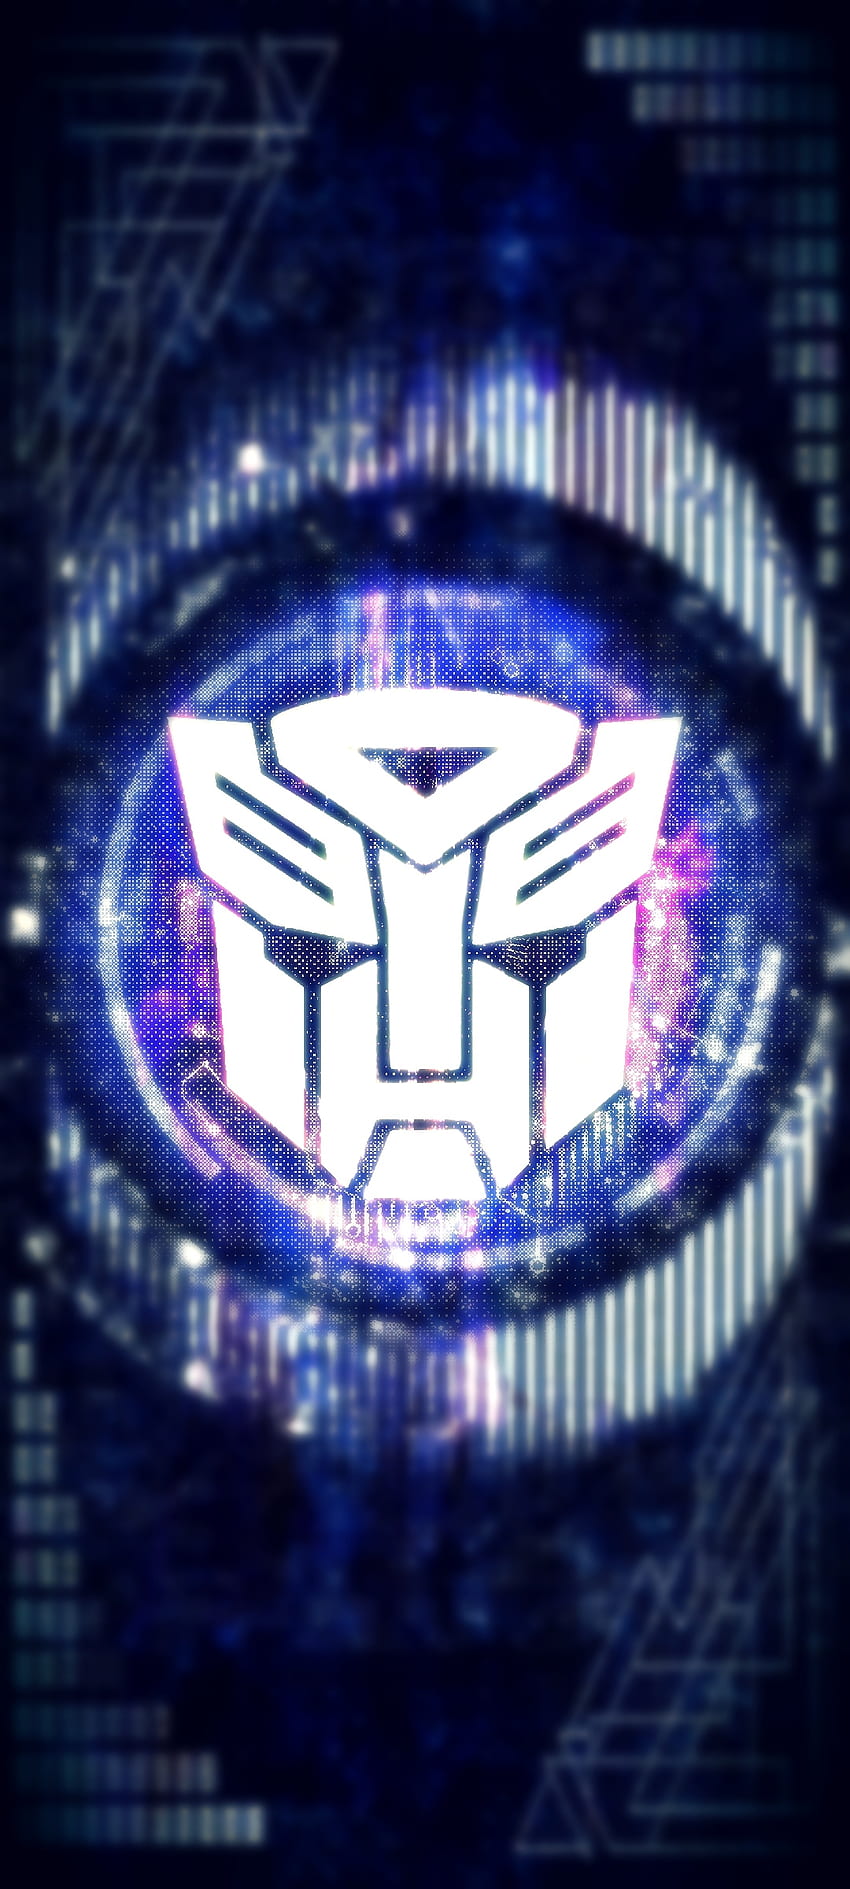 Details more than 88 transformers autobots logo wallpaper best ...